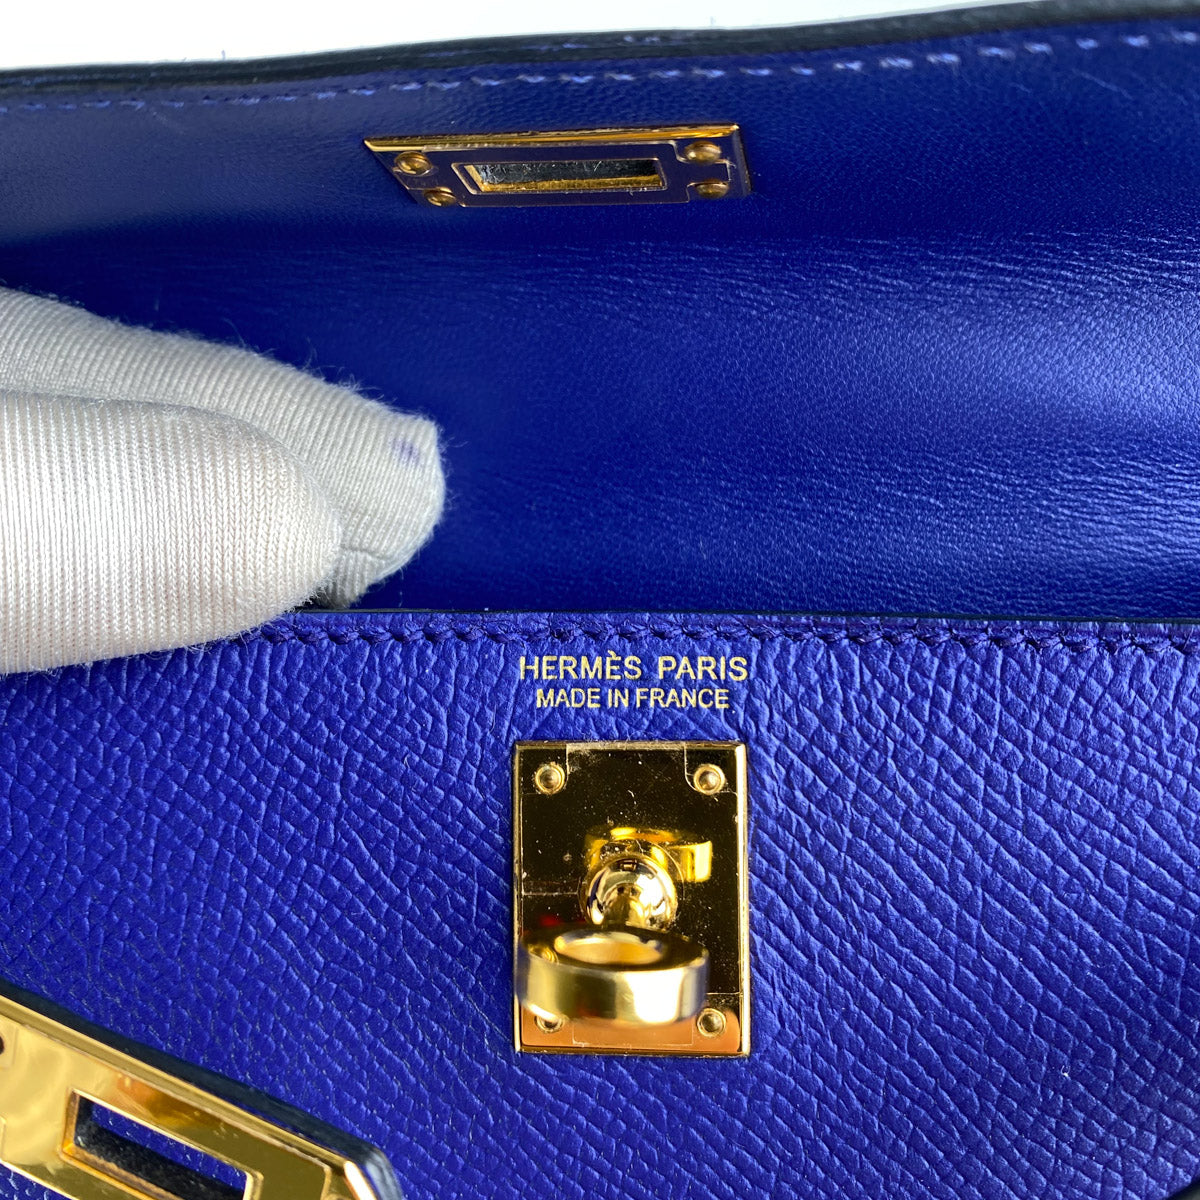 Mini kelly 20 blue color gold hardware epsom leather — Styleout